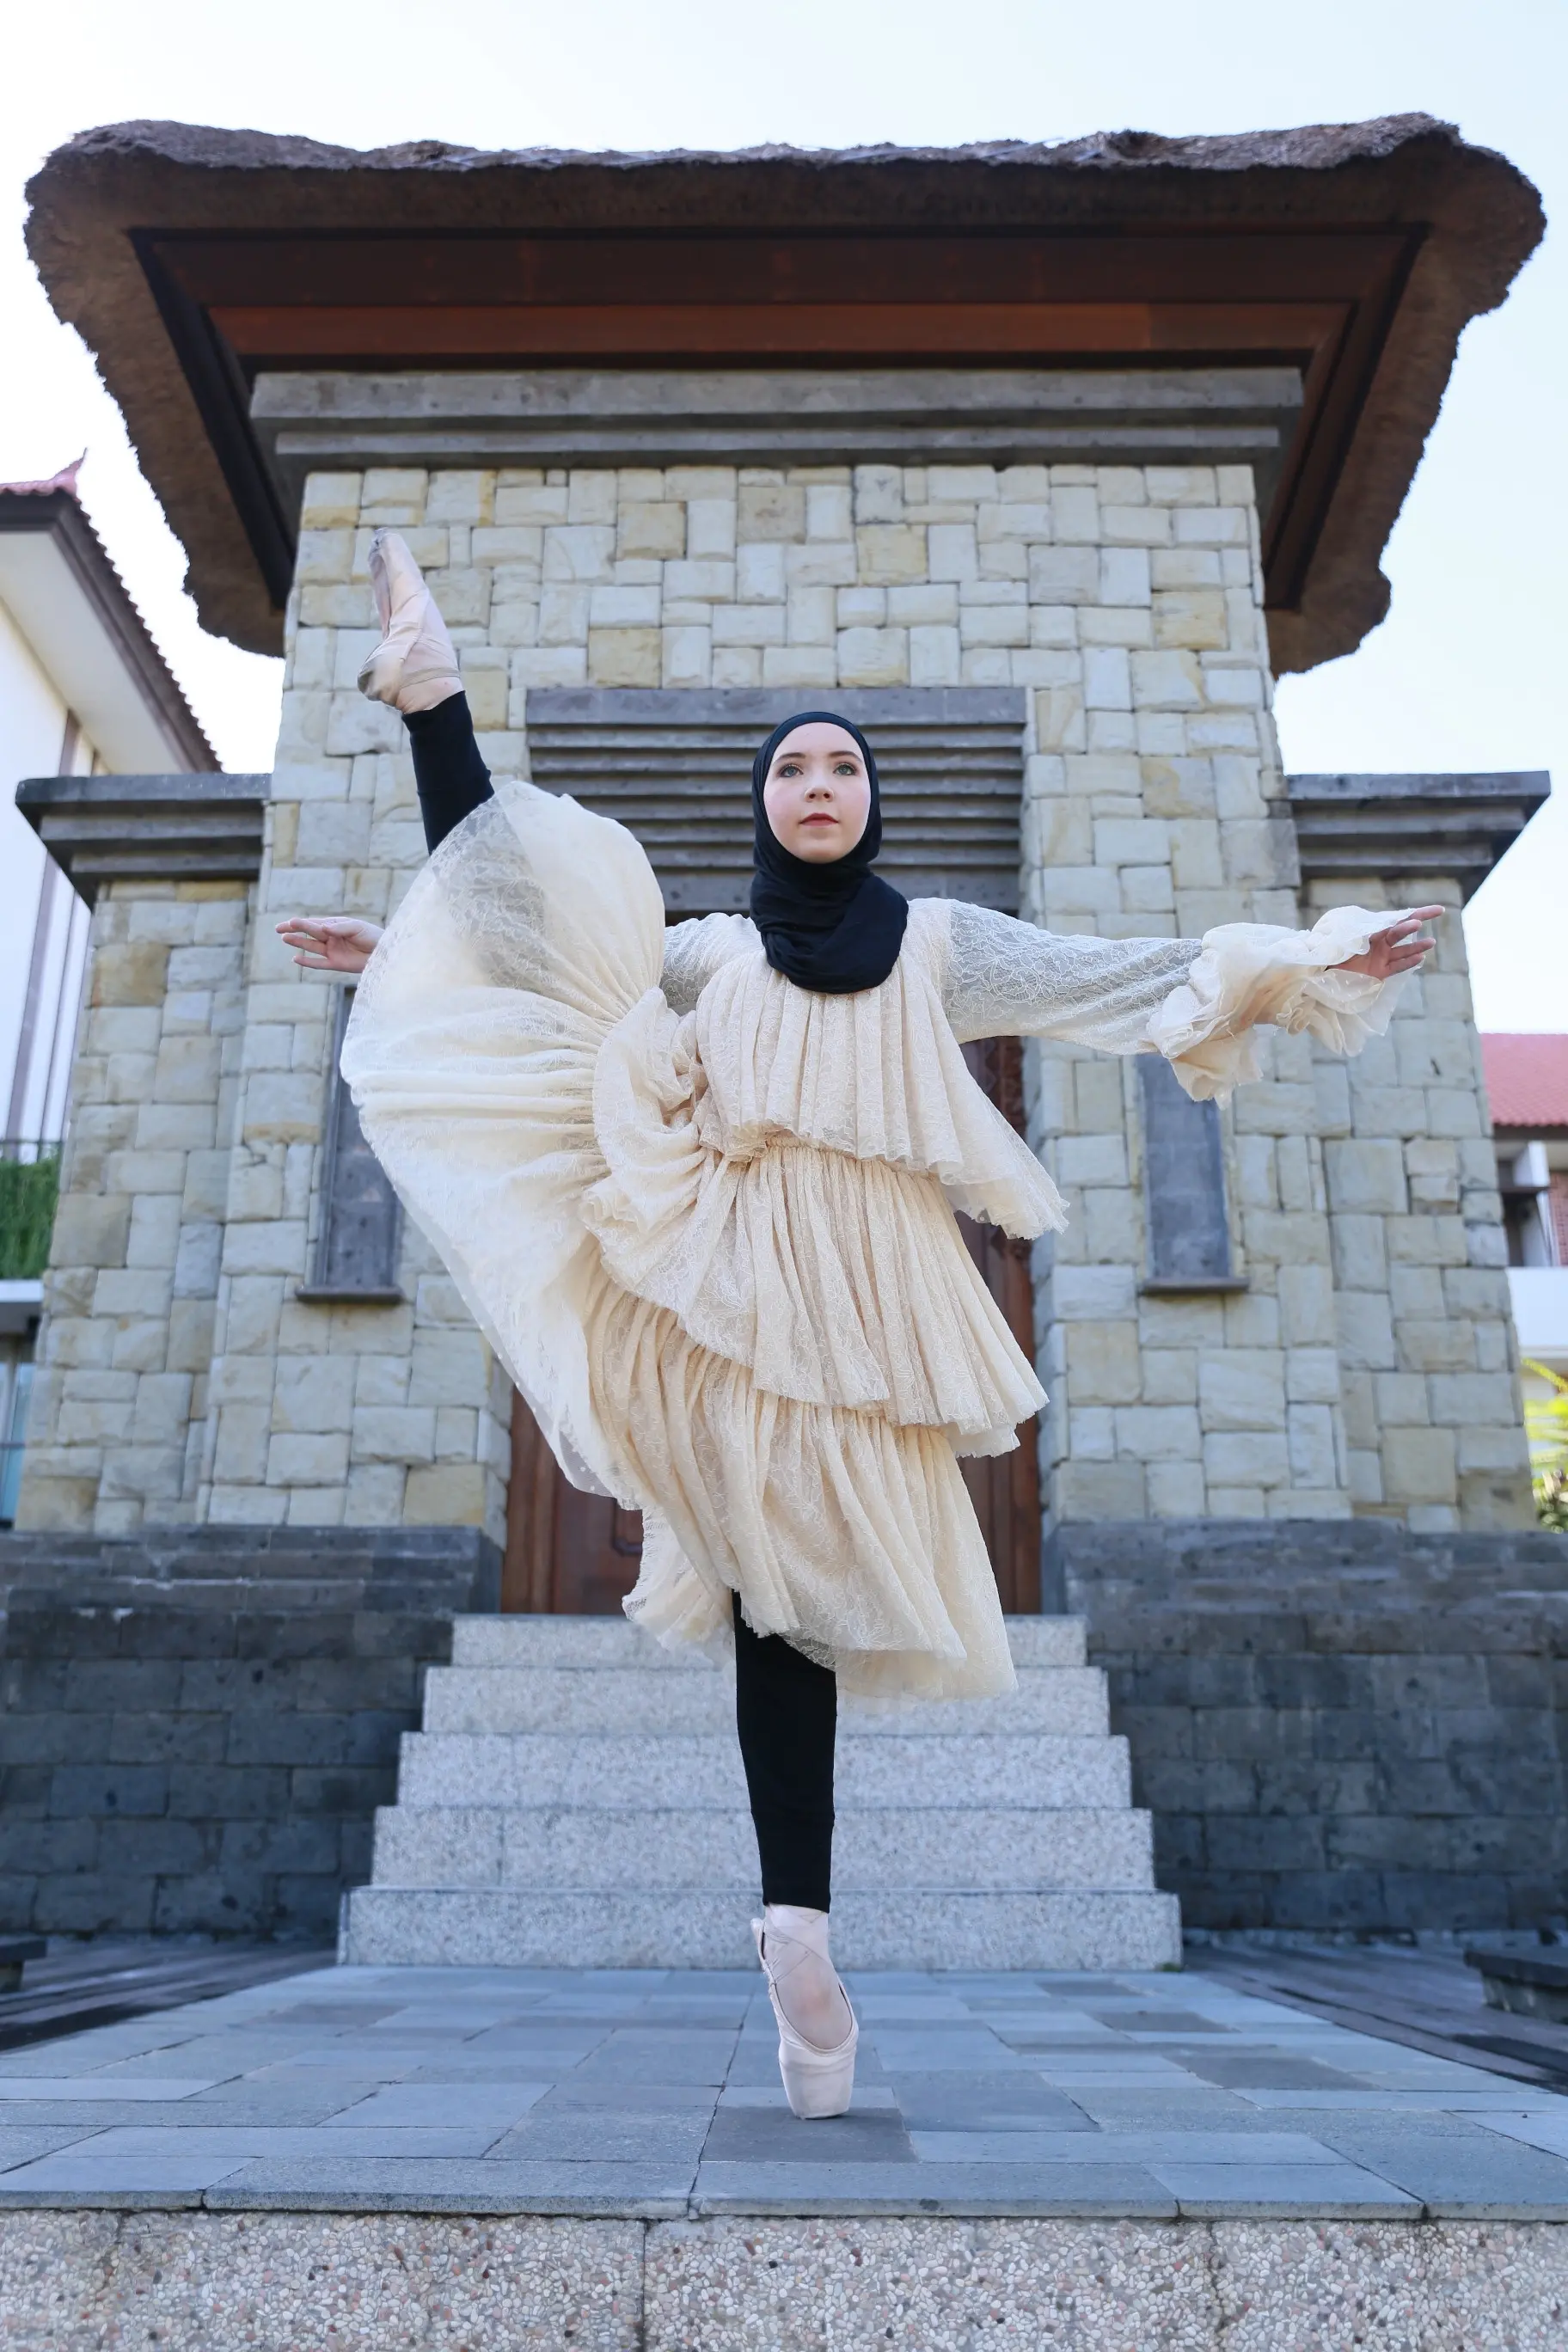 Wardah memperkenalkan Stephanie Kurlow, penari balet profesional berhijab pertama di dunia untuk mengajak masyarakat Indonesia lebih berani bermimpi dan mewujudkannya.